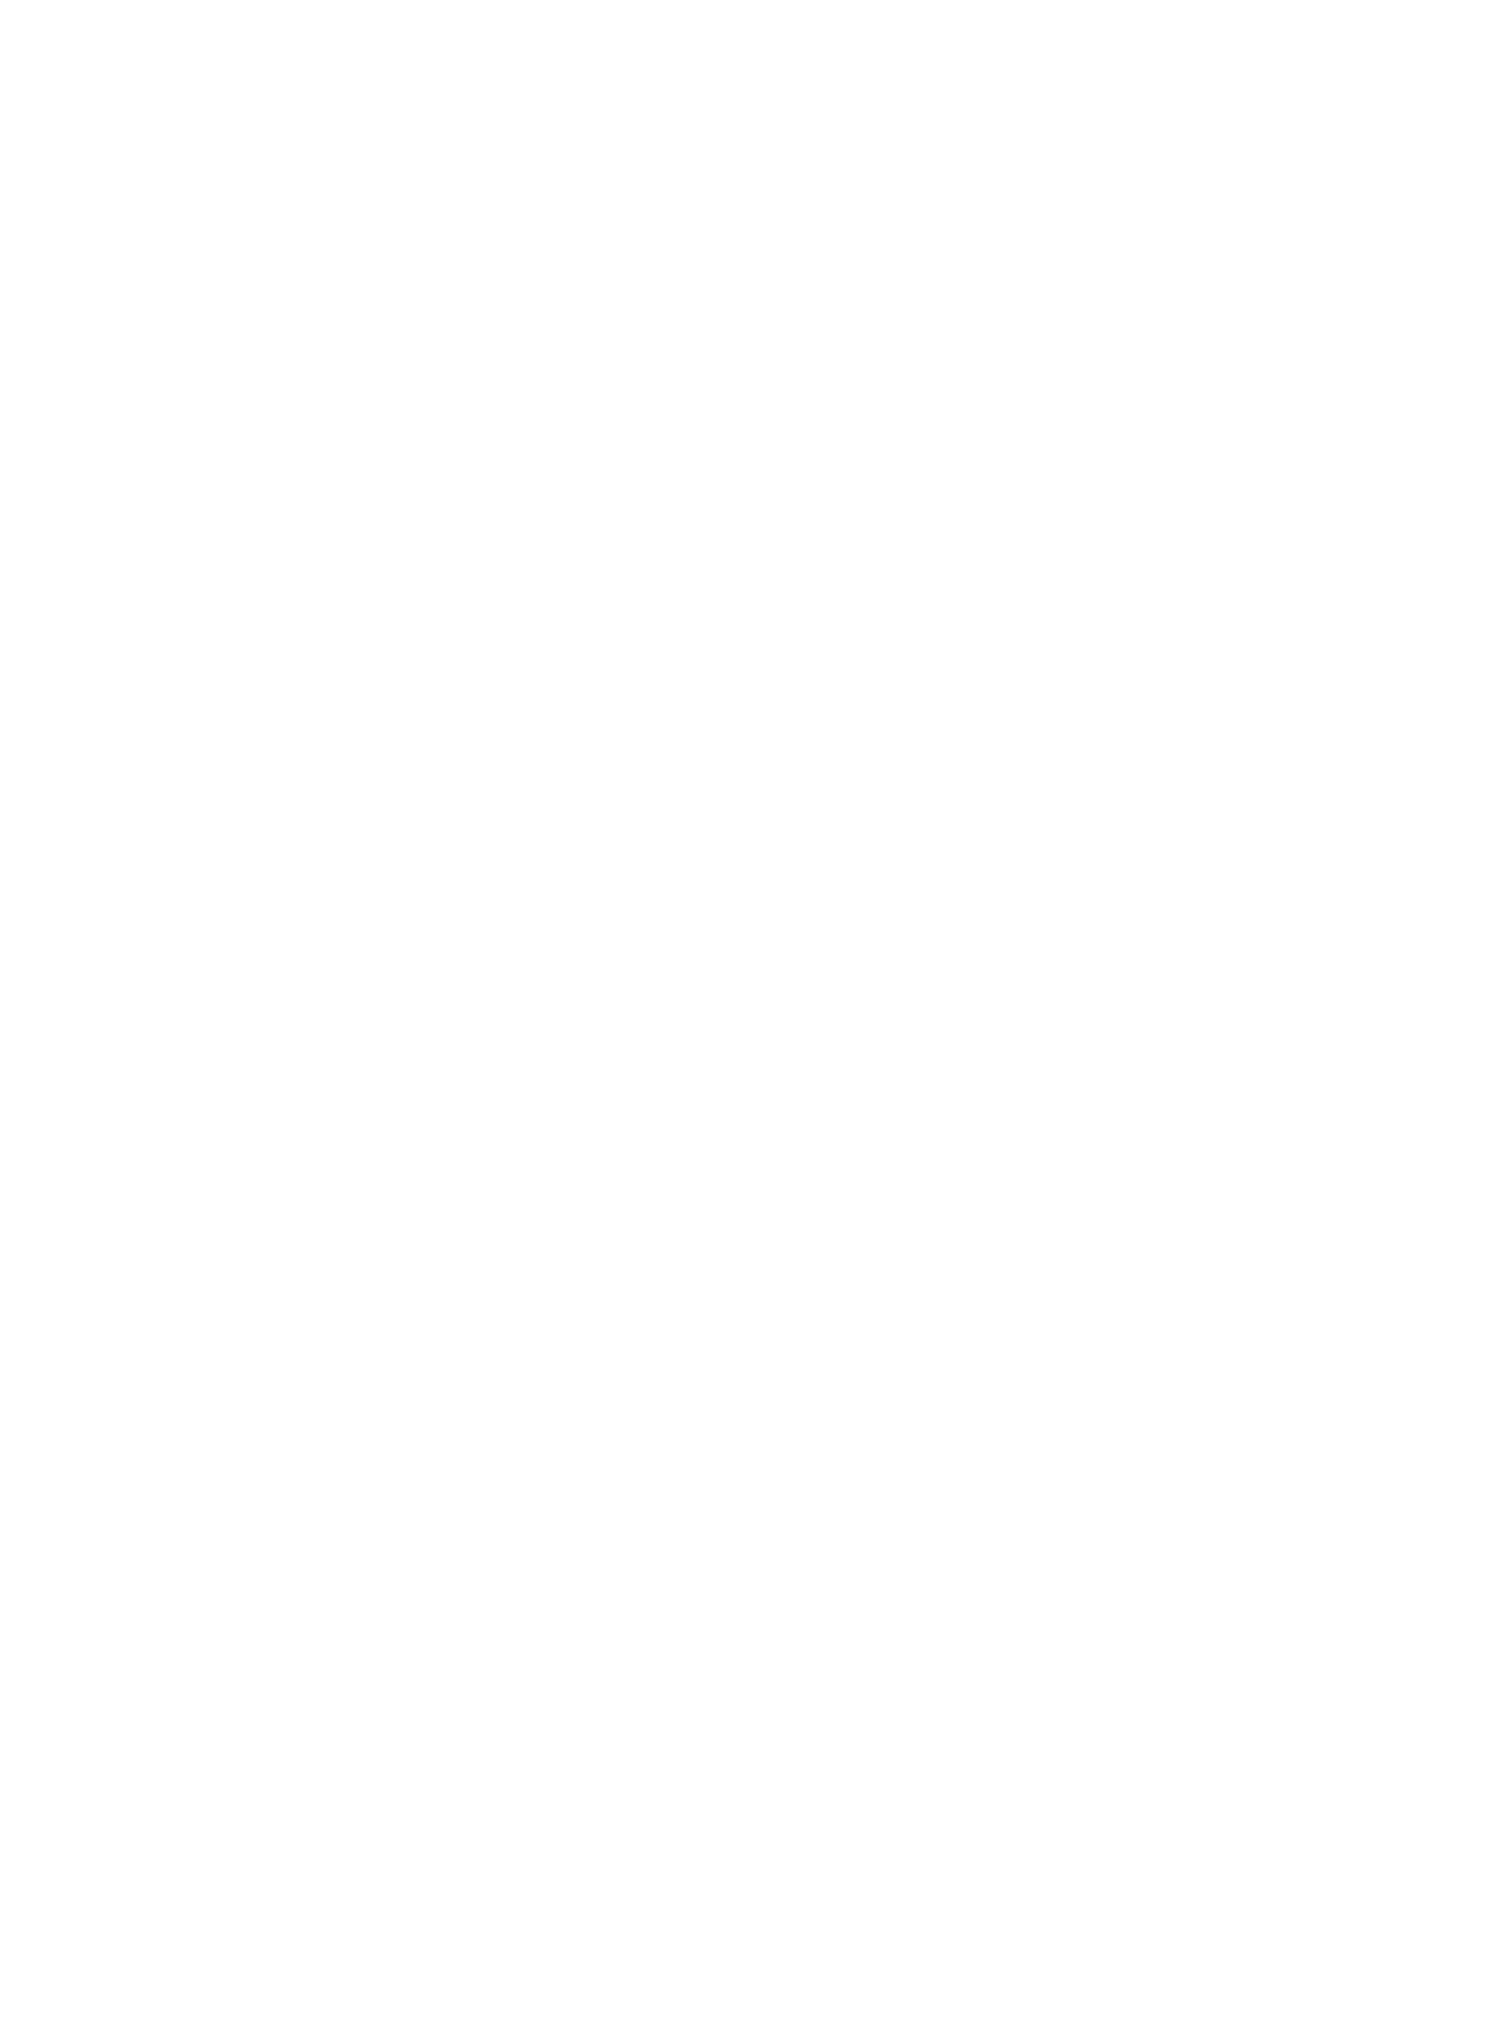 Macdonald Group Real Estate